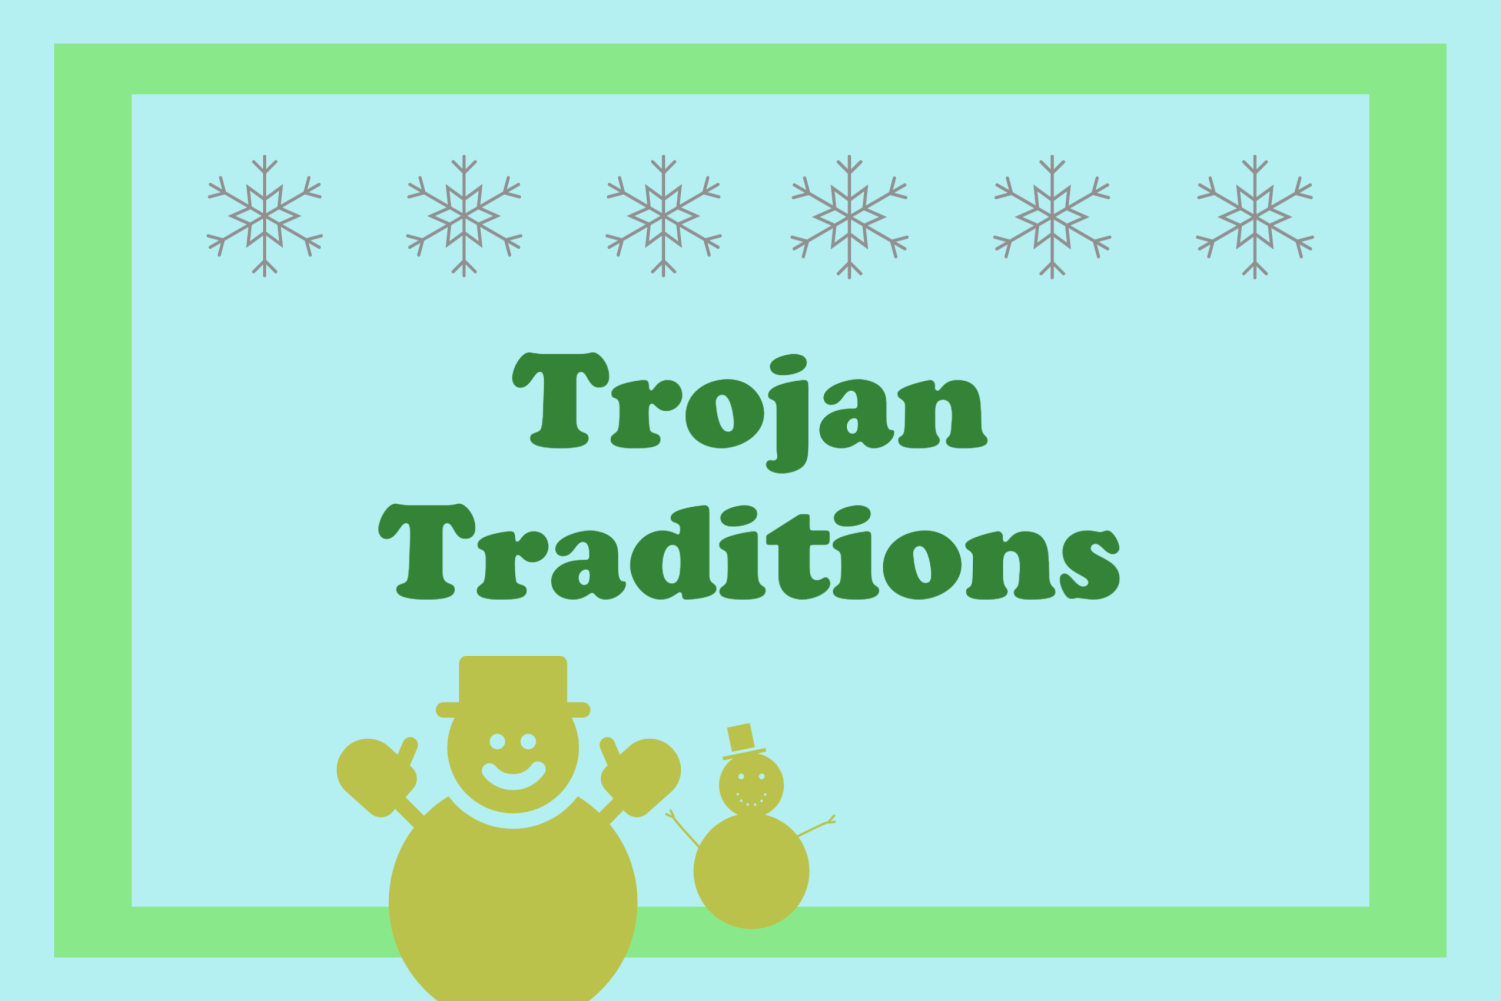 Trojan traditions